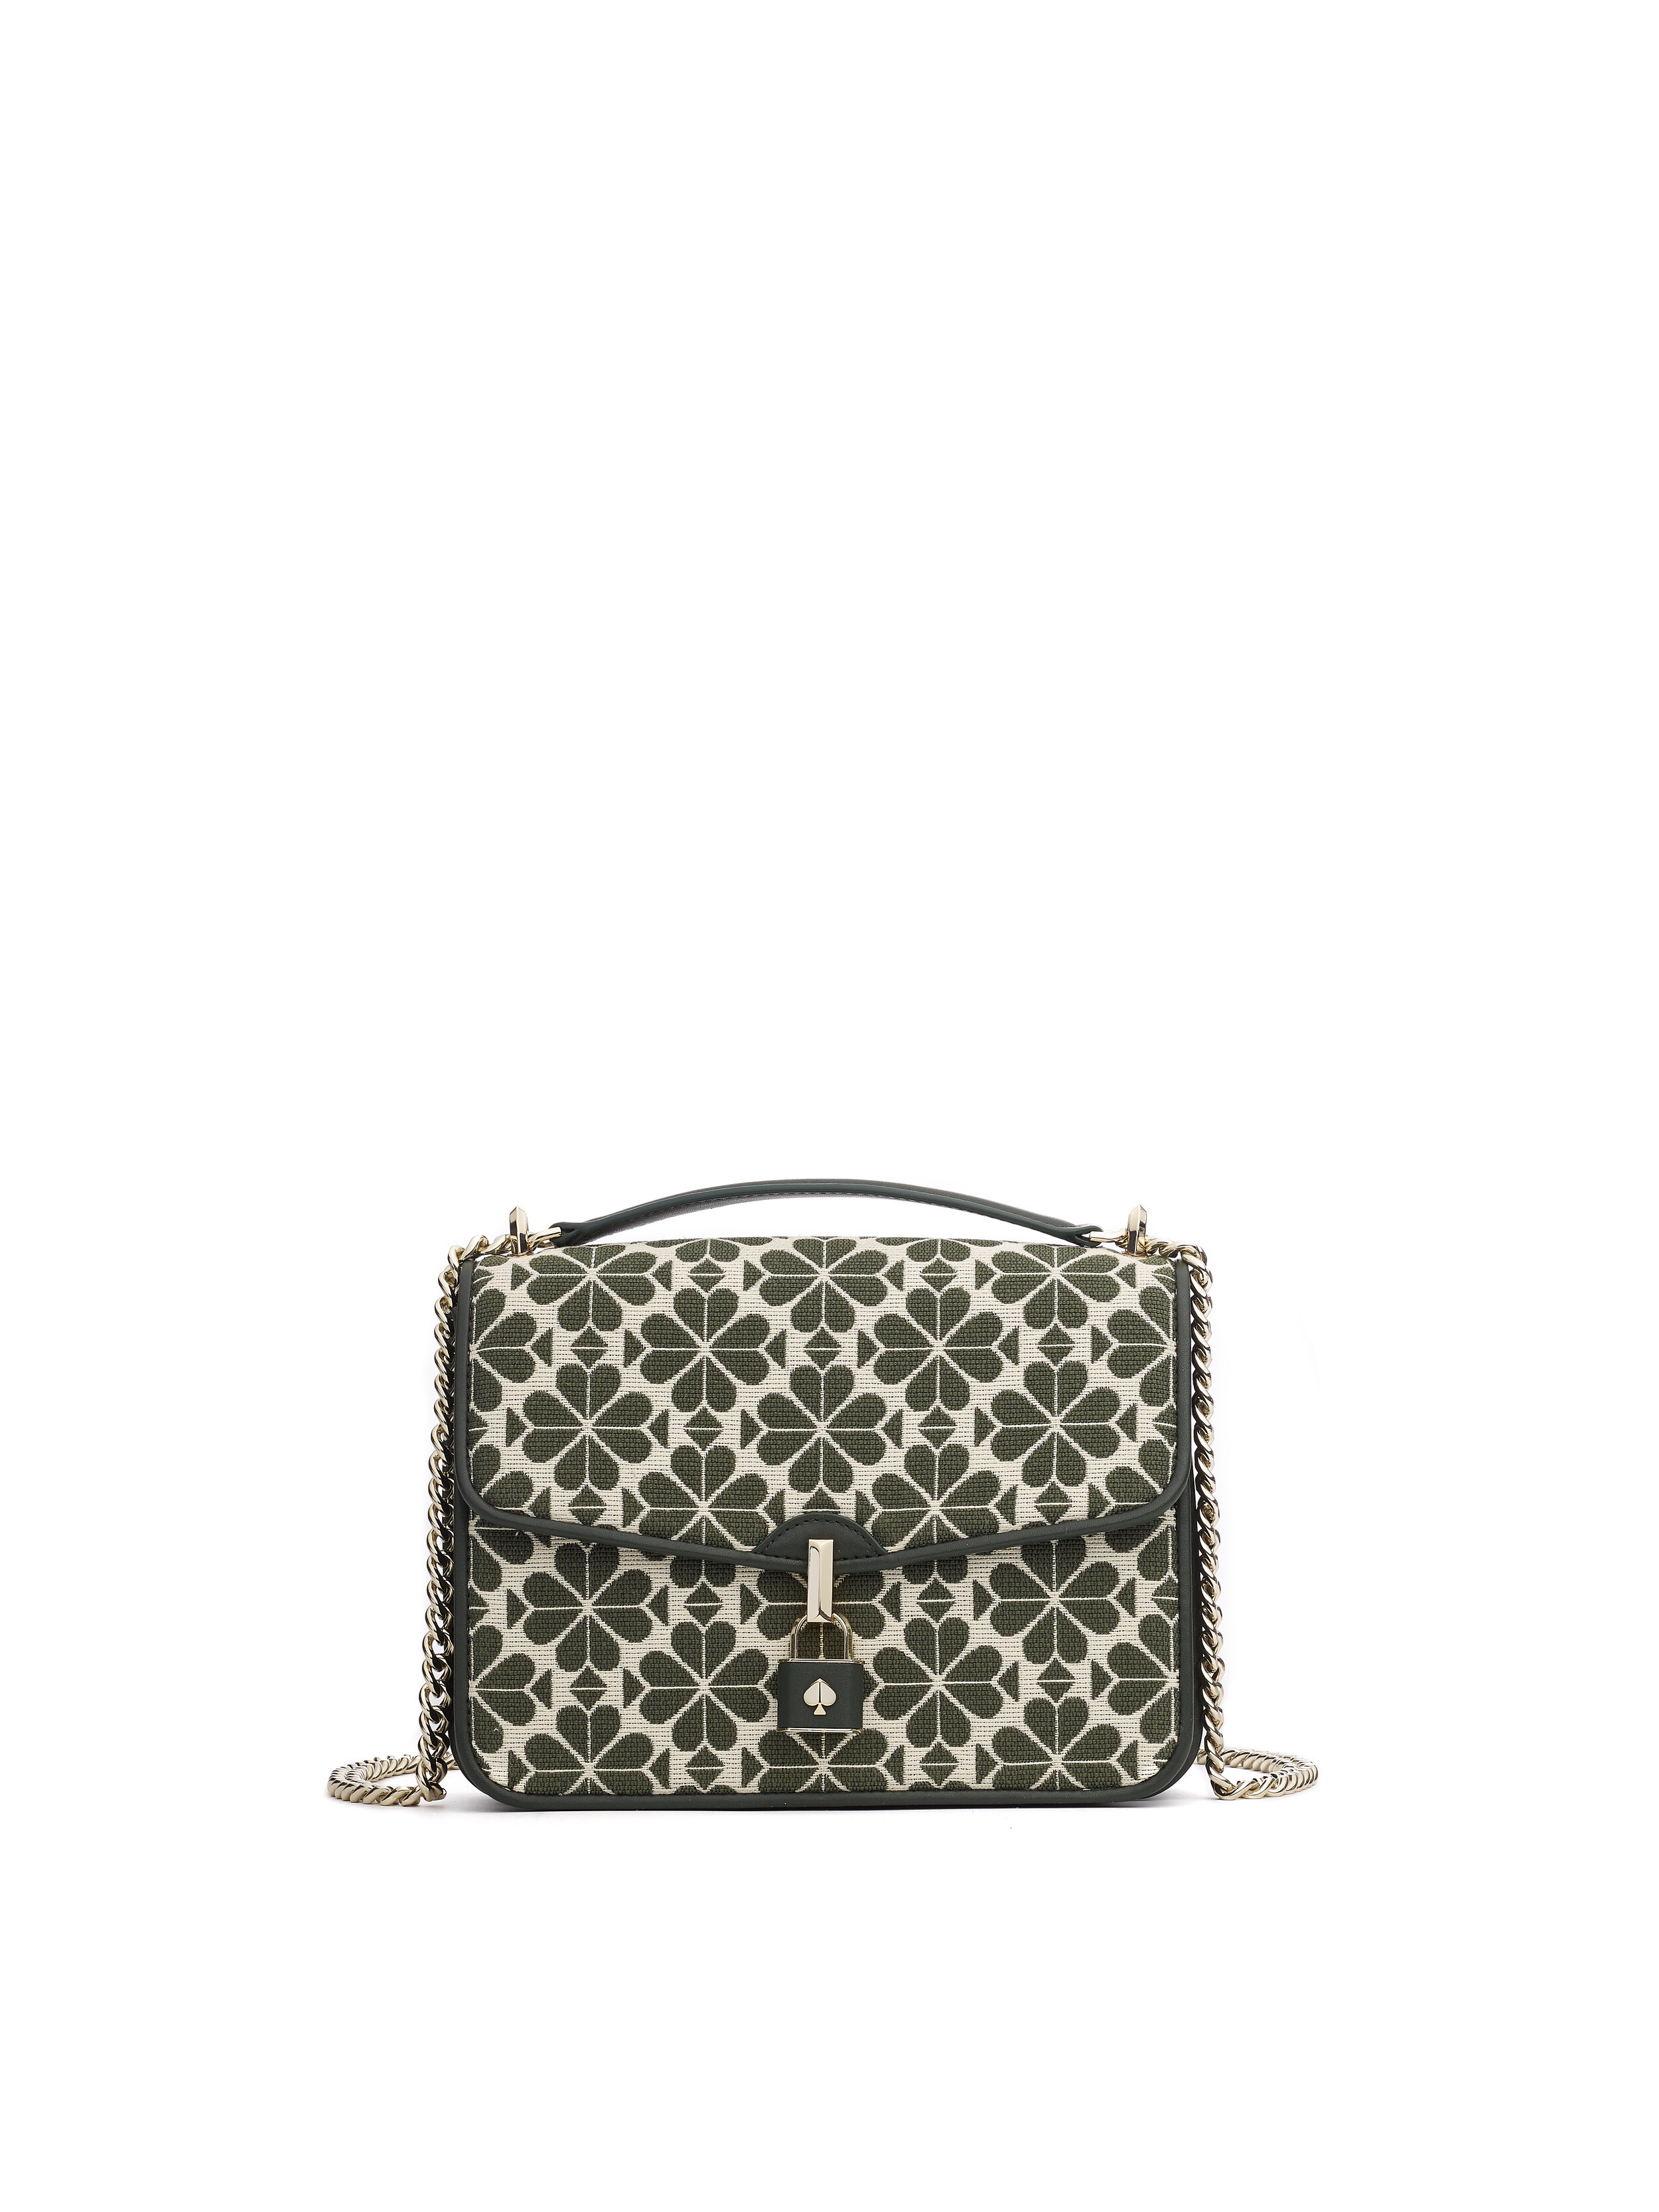 Kate Spade New York Signature Handbag Collection Fall 2020 — SSI Life